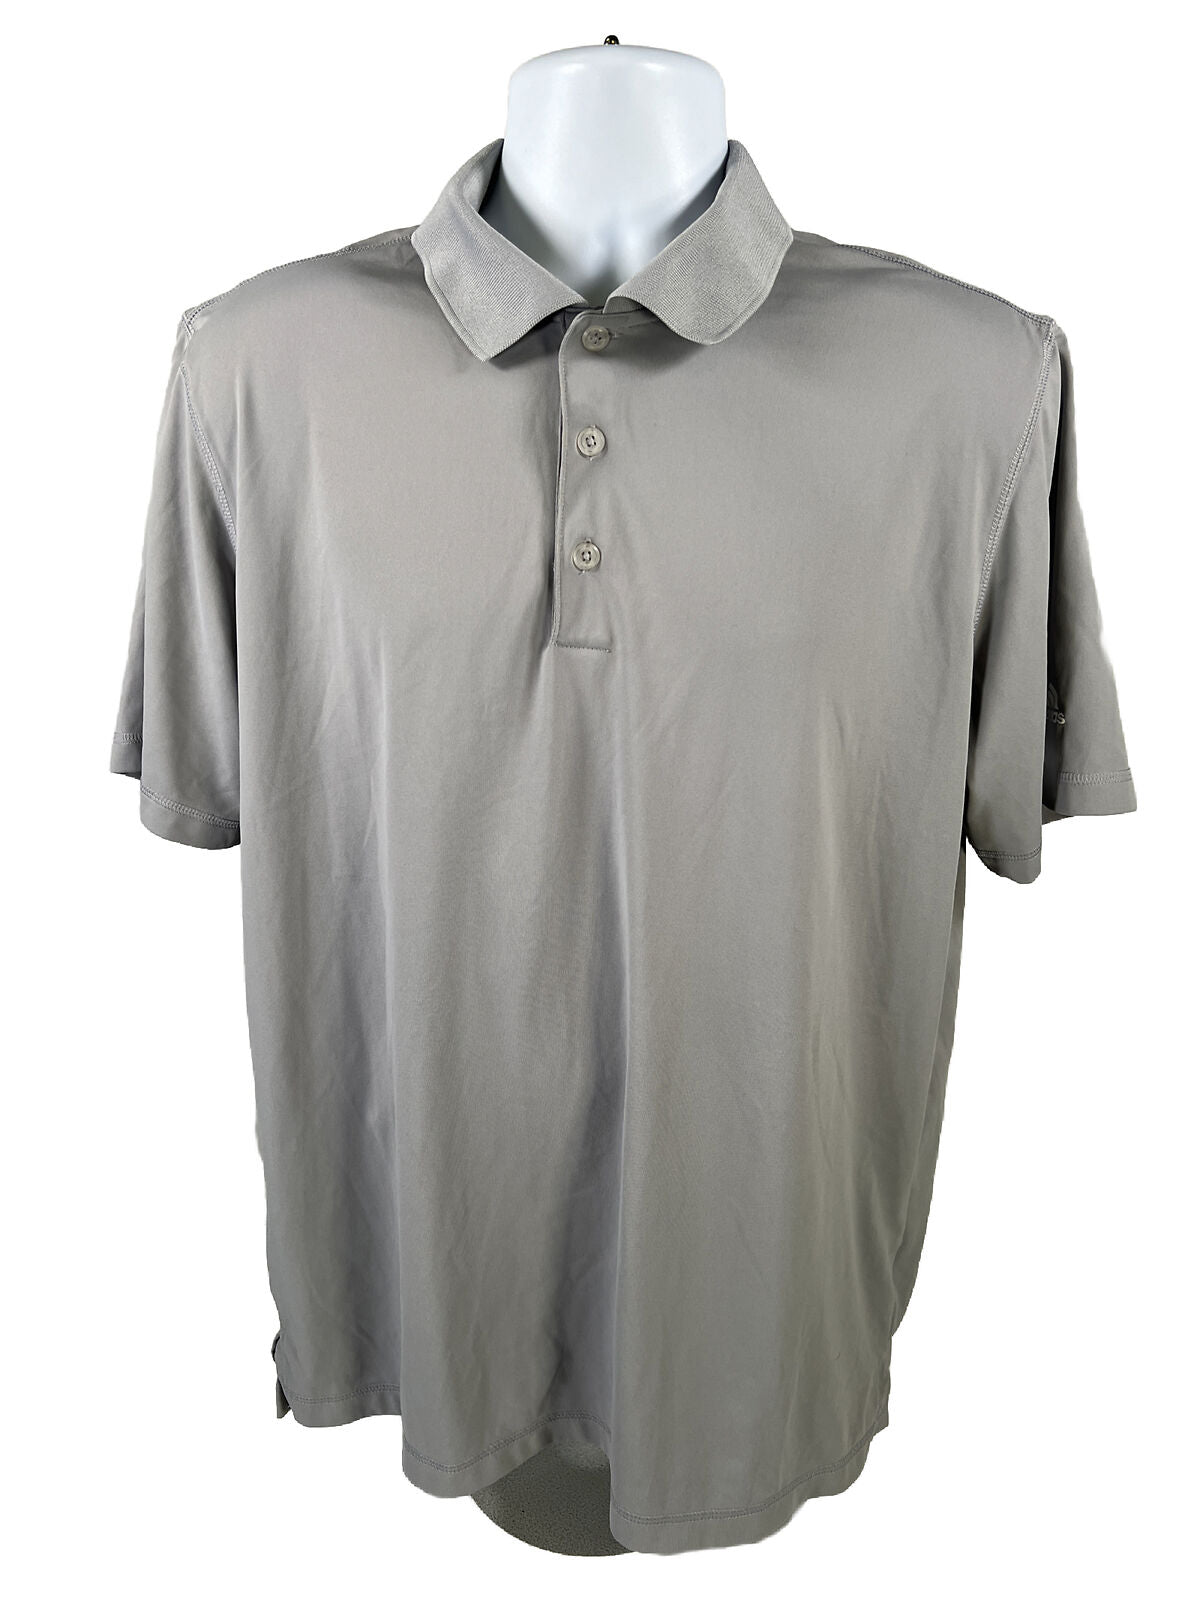 adidas Men's Gray Puremotion Golf Polo Shirt Short Sleeve - L